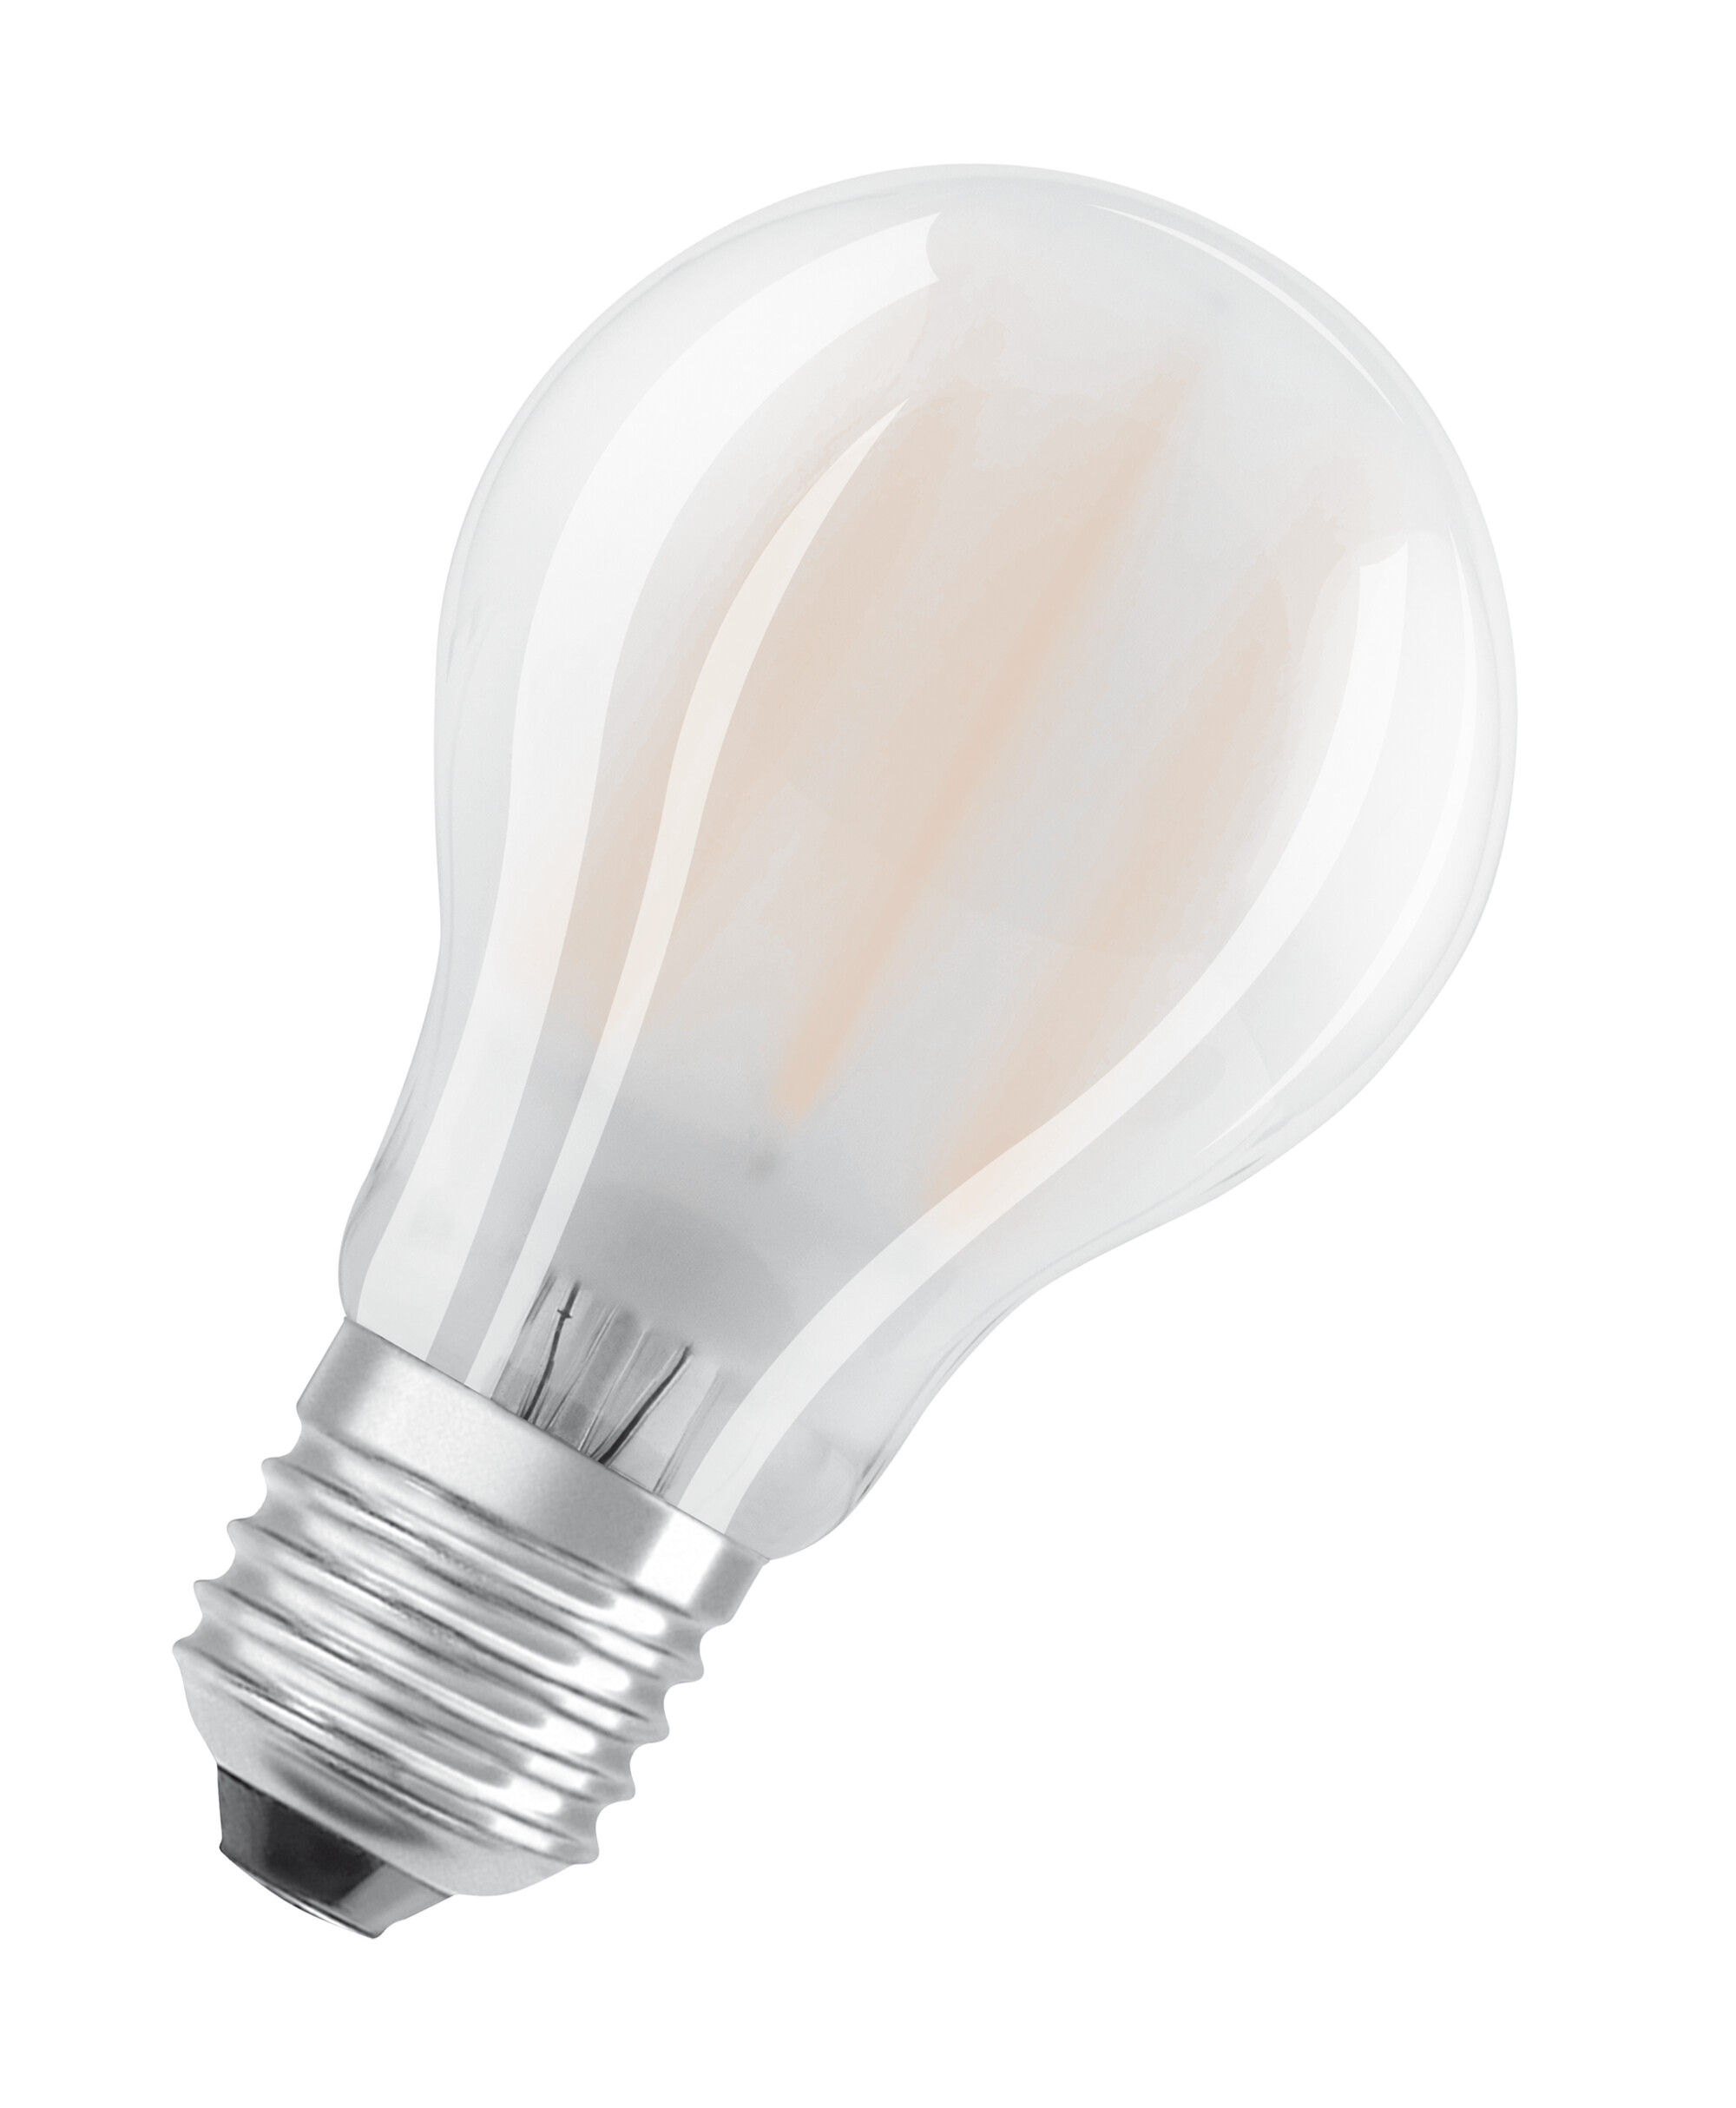 Osram LED Glühlampenform Parathom Classic A100 11 Watt 827 2700 Kelvin warmweiss extra 1521 Lumen E27 matt